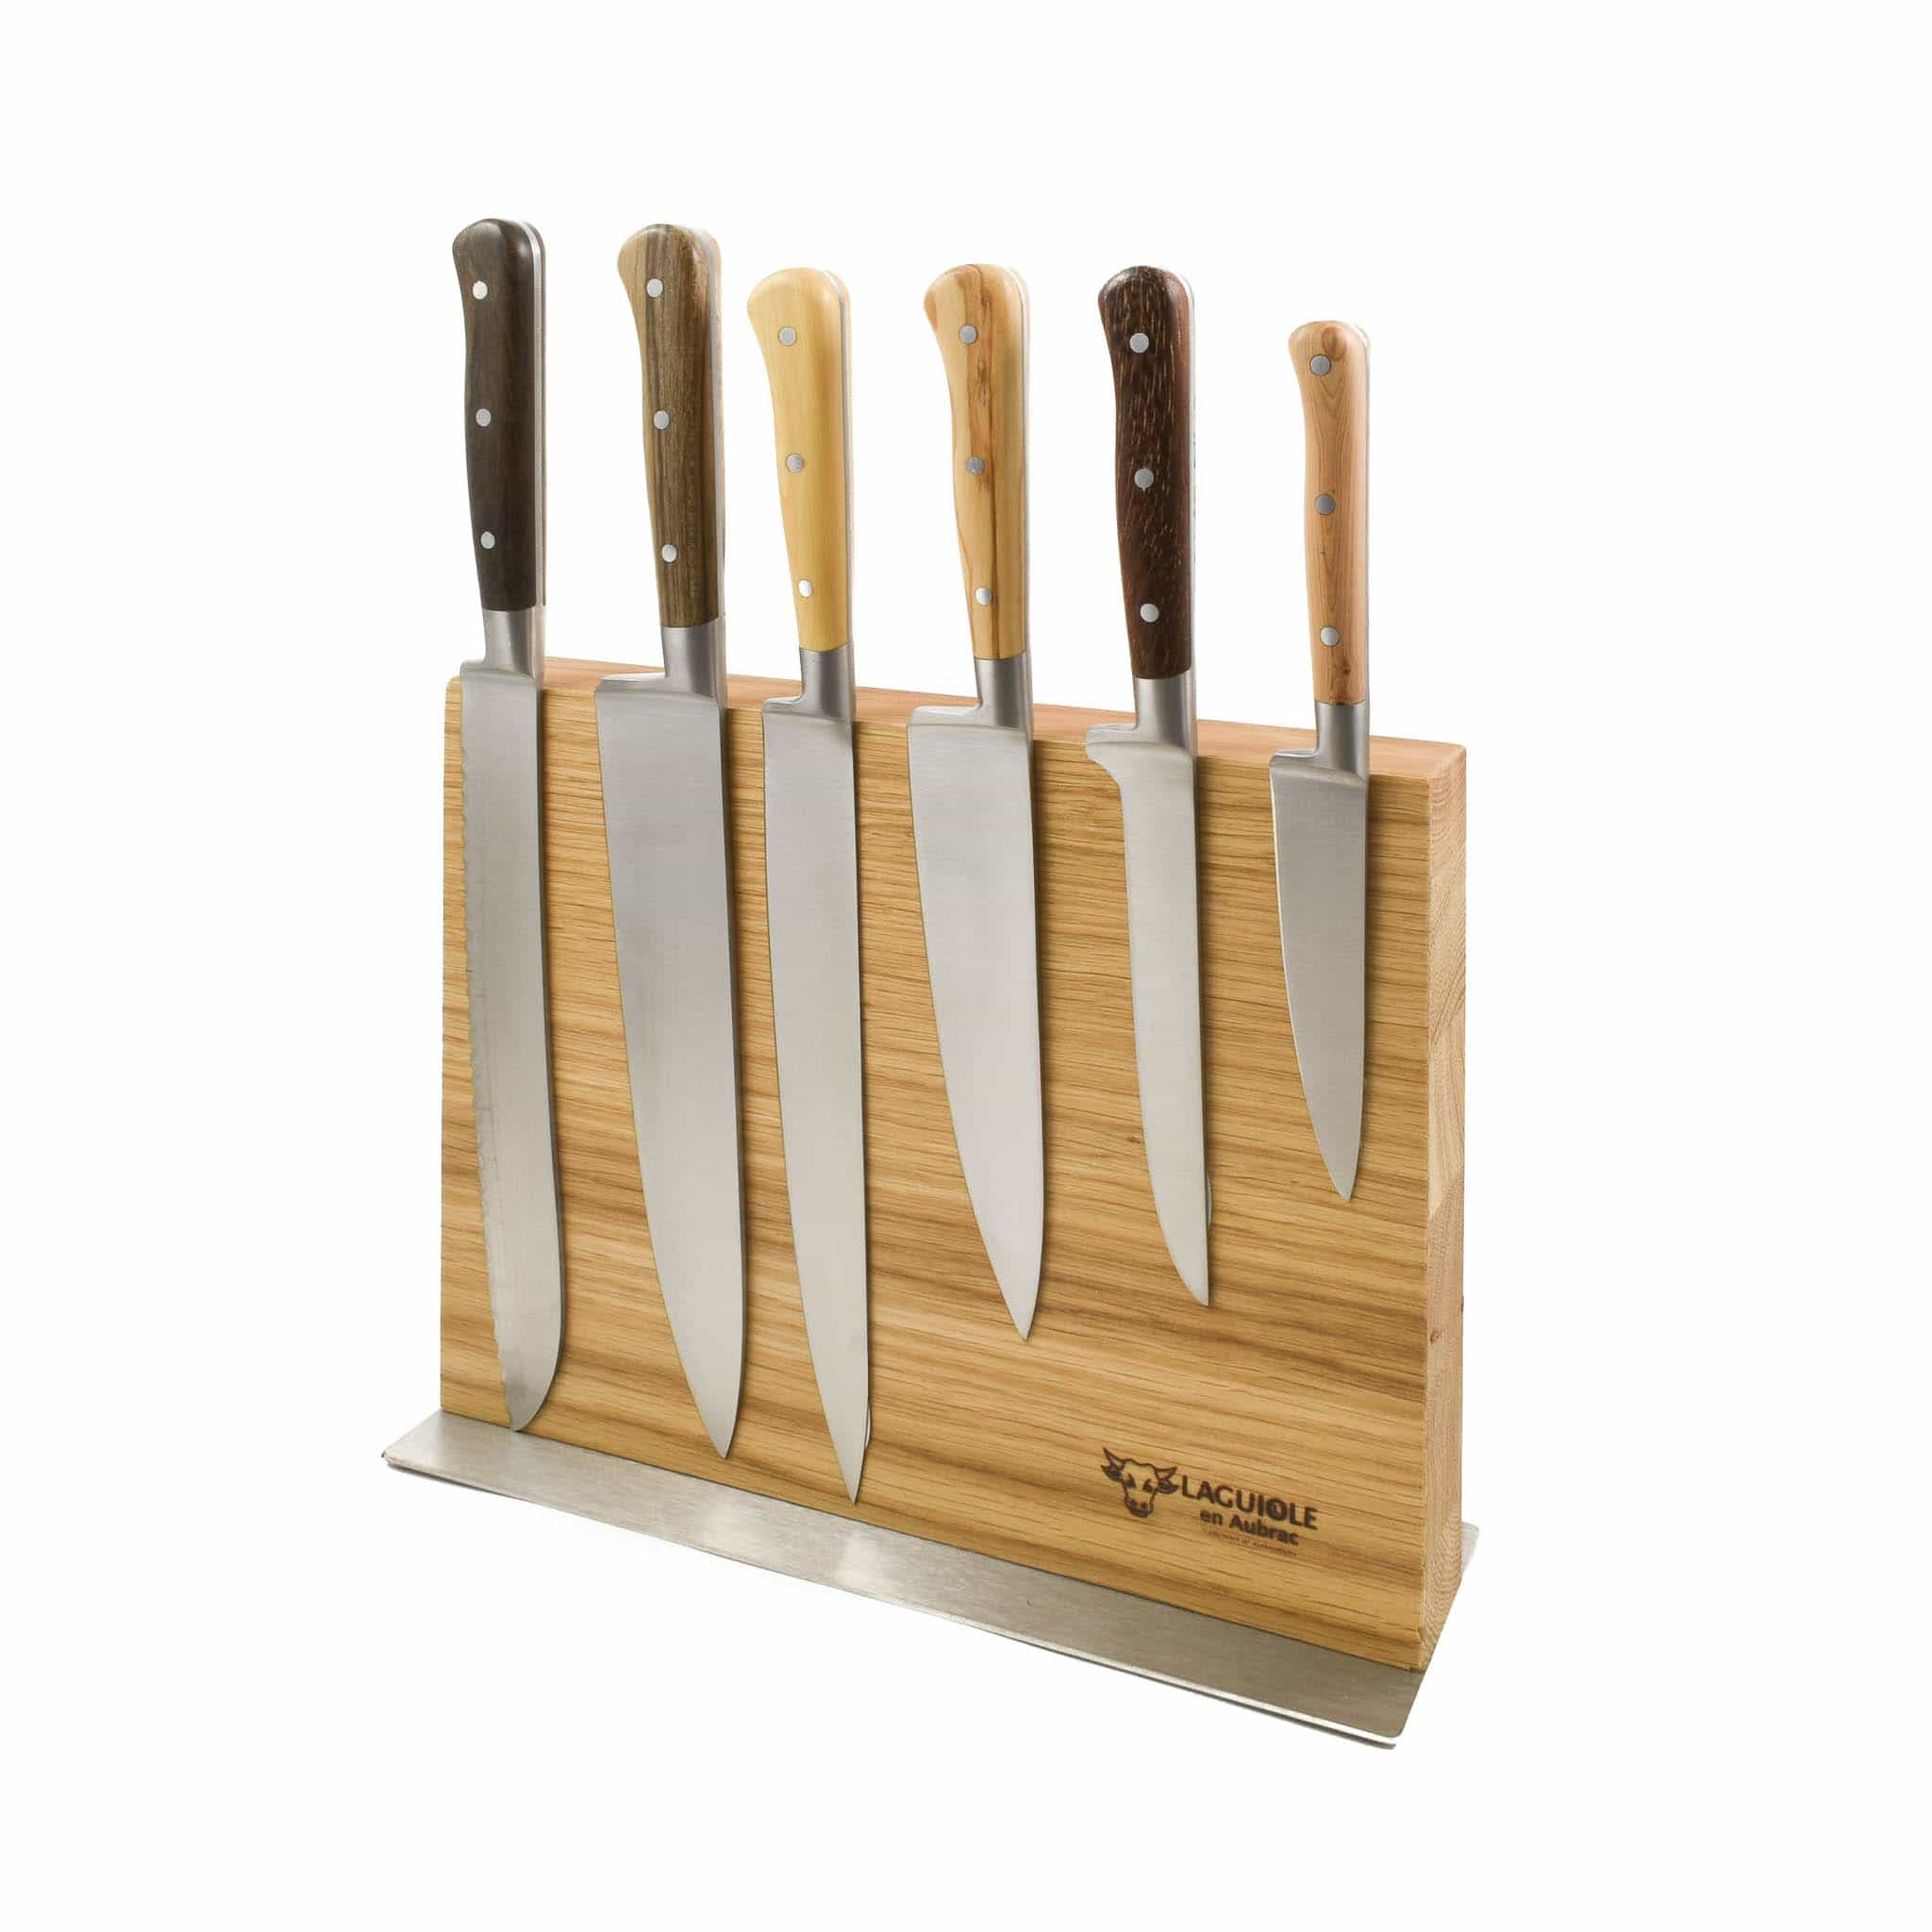 Laguiole en Aubrac Classic Knife Block of 6 Kitchen Knives, Mixed Woods